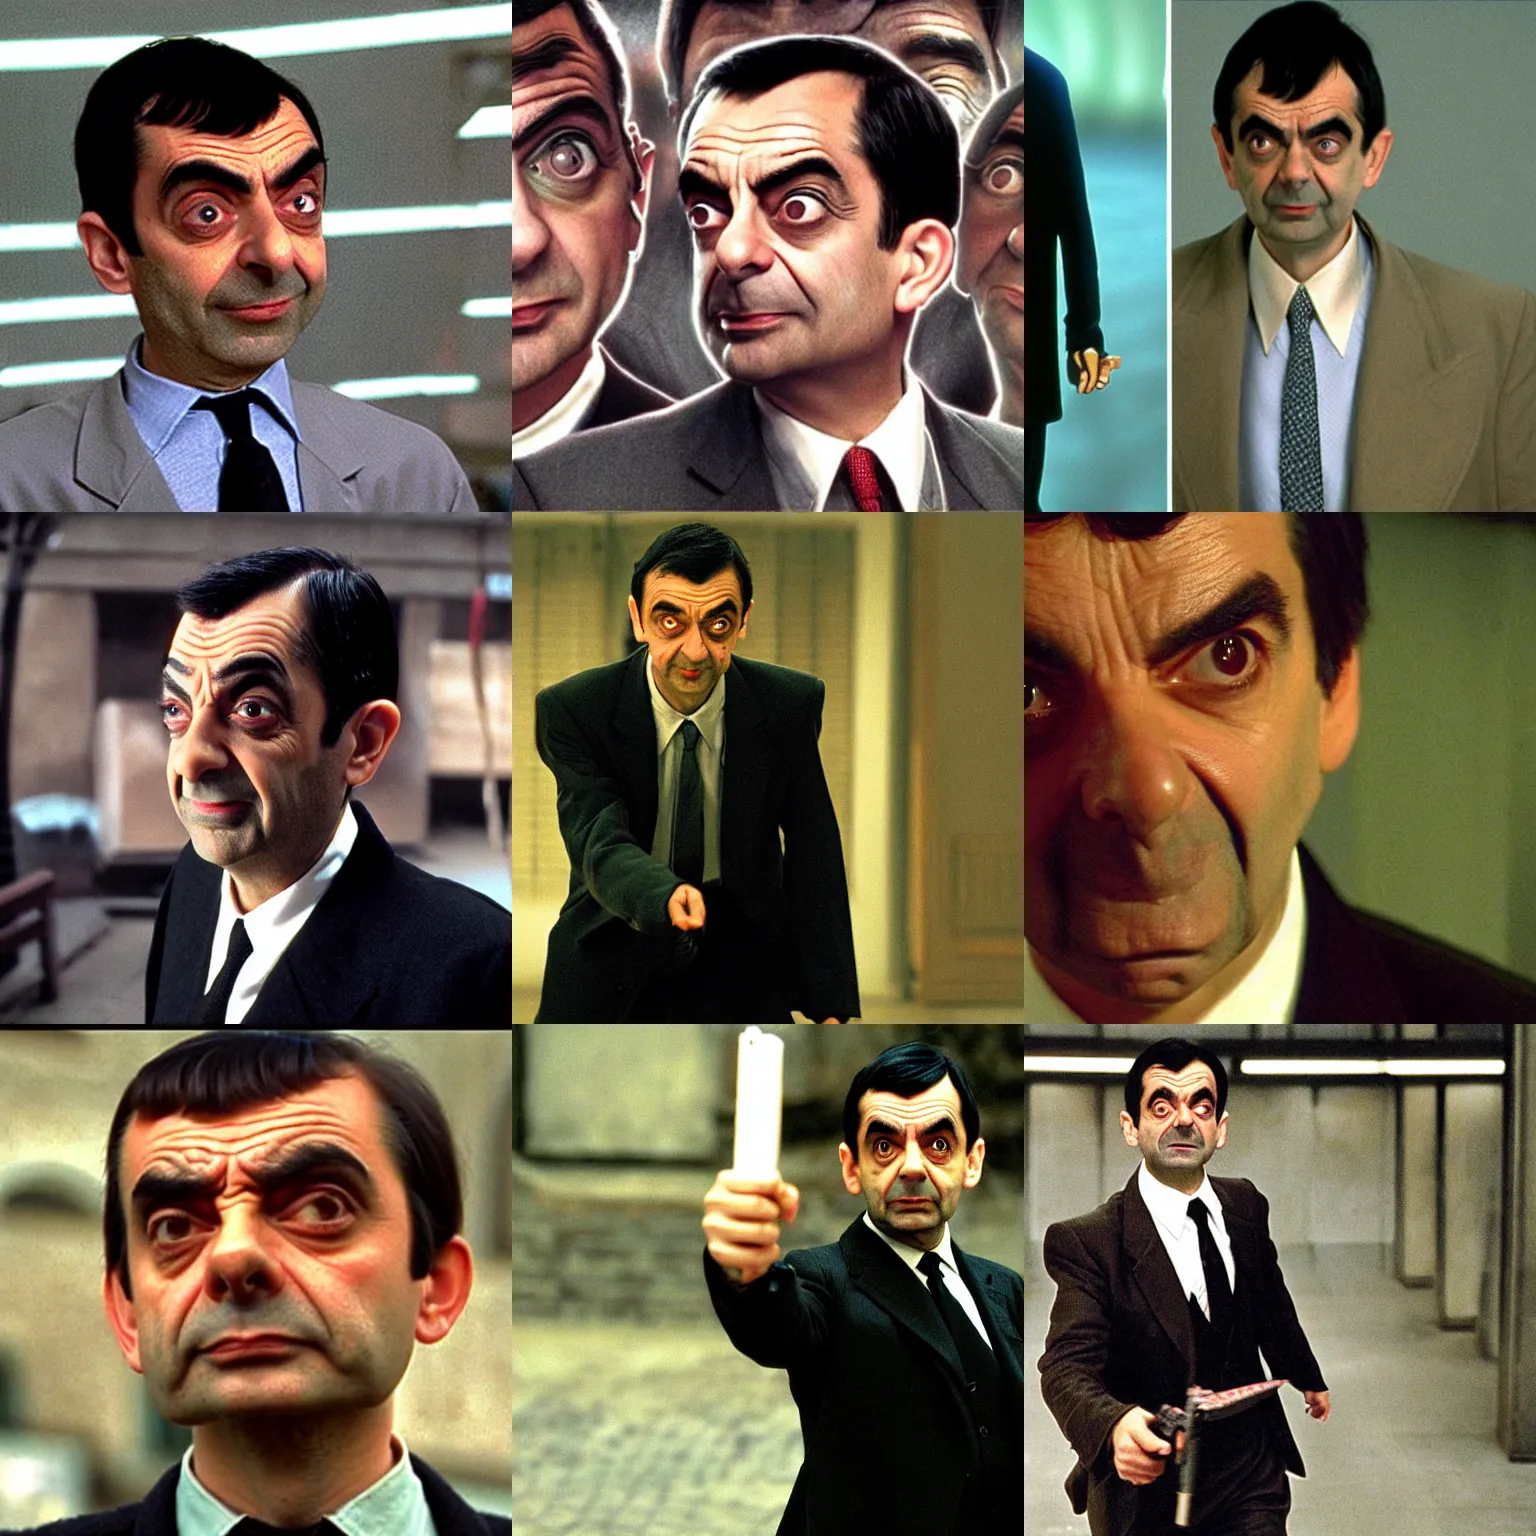 Prompt: Mr Bean in the Matrix